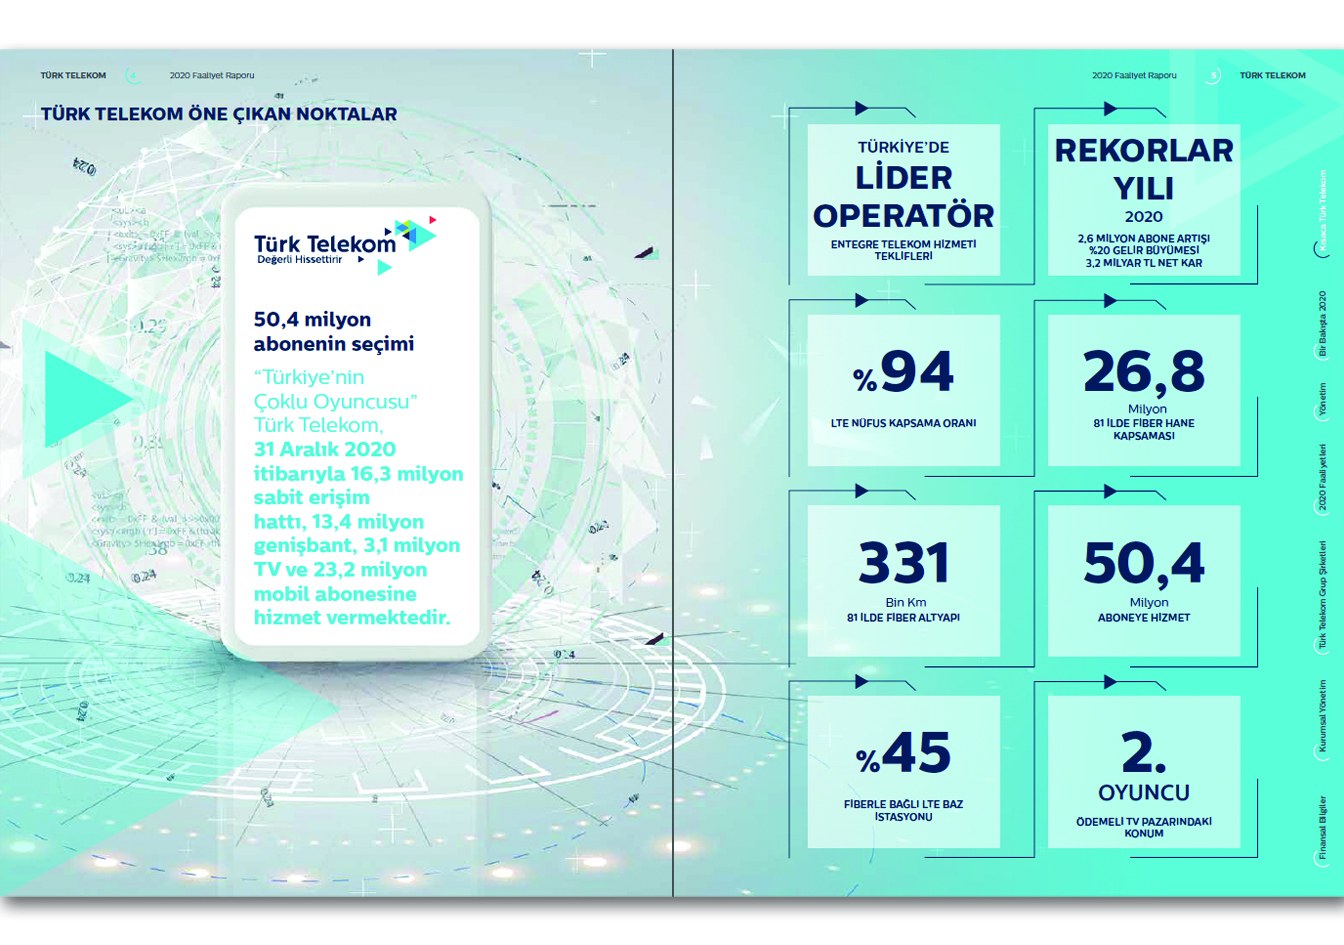 TÜRK TELEKOM / 2020 Faaliyet Raporu / 2020 Annual Report